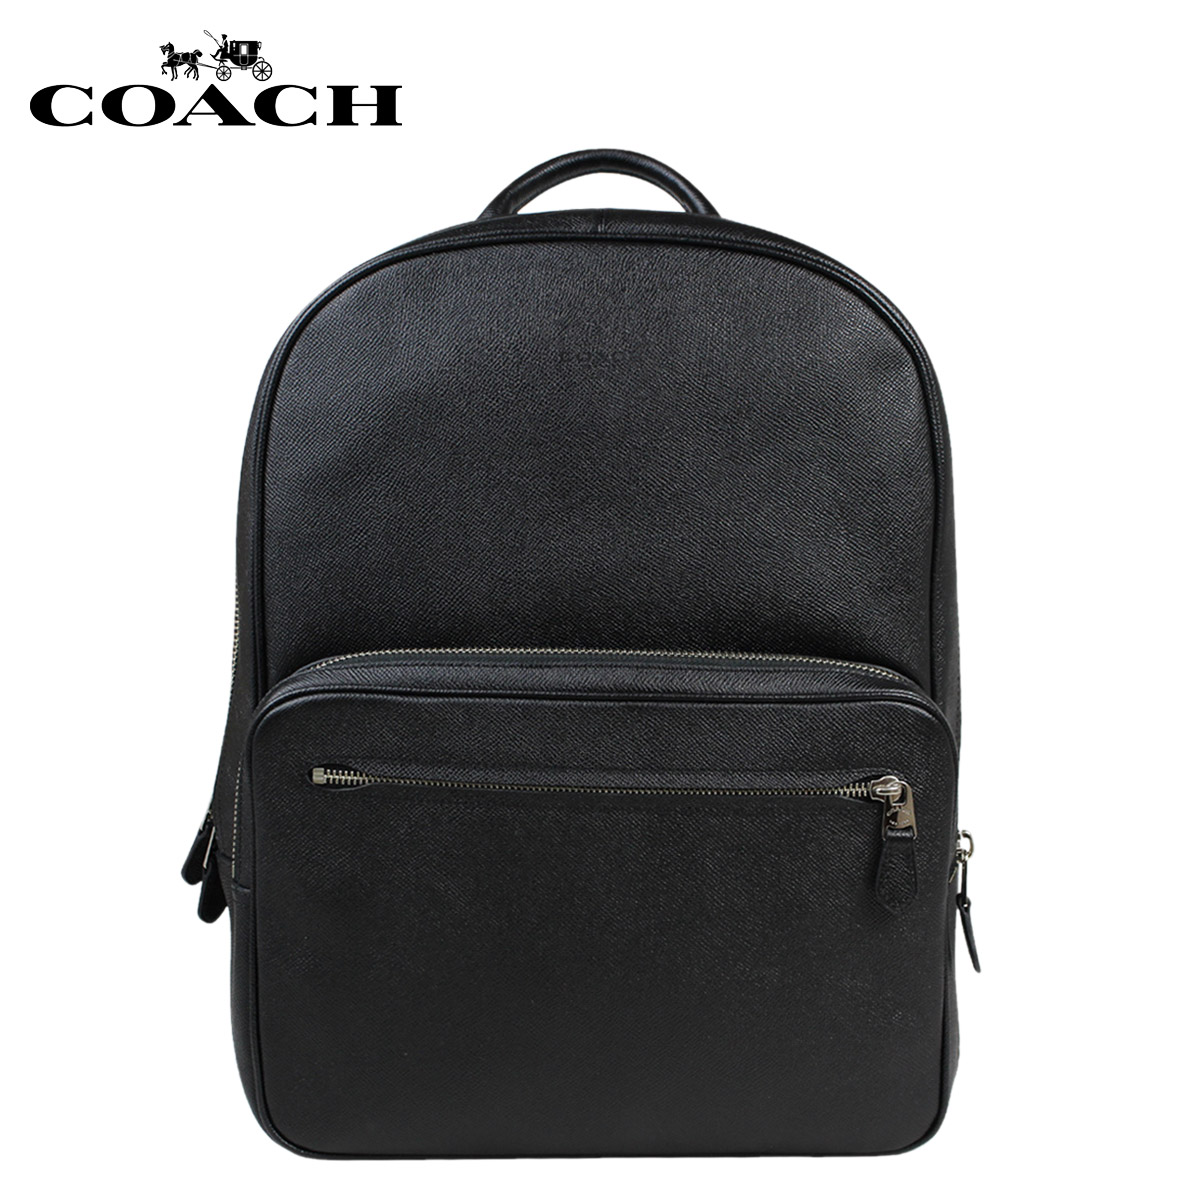 Sugar Online Shop: [SOLD OUT] COACH coach mens bag rucksack backpack products 71983 black ...